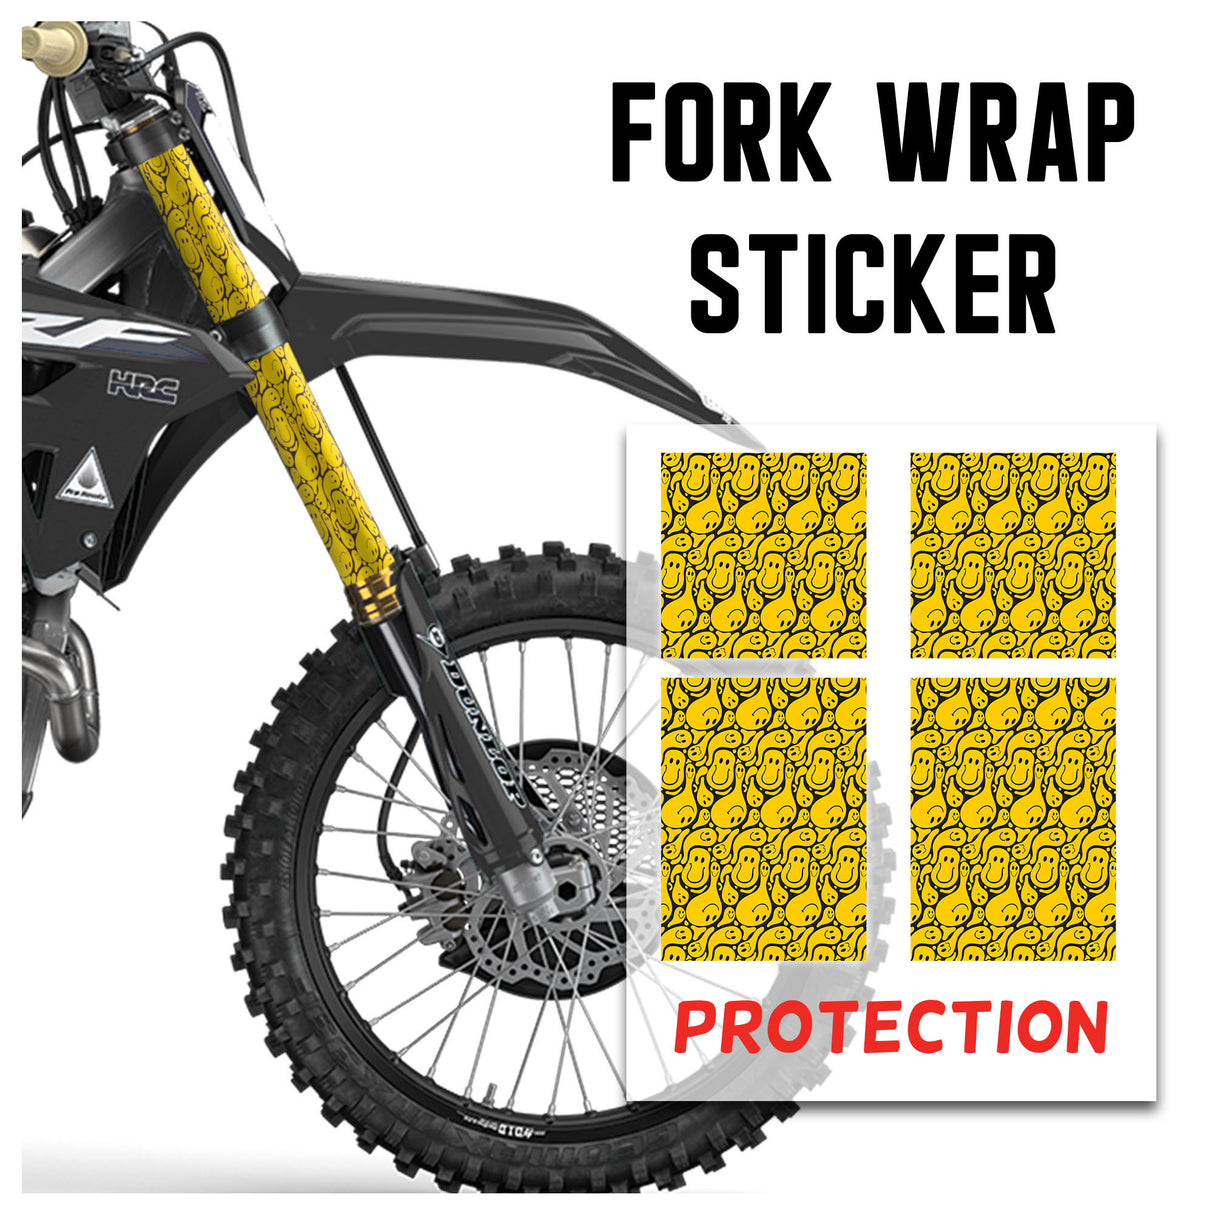 MX Drit Bike Front Fork Wrap Sticker Protection For Honda Yamaha Kawaski Suzuki [TT01 Smiley] - StickerBao Wheel Sticker Store